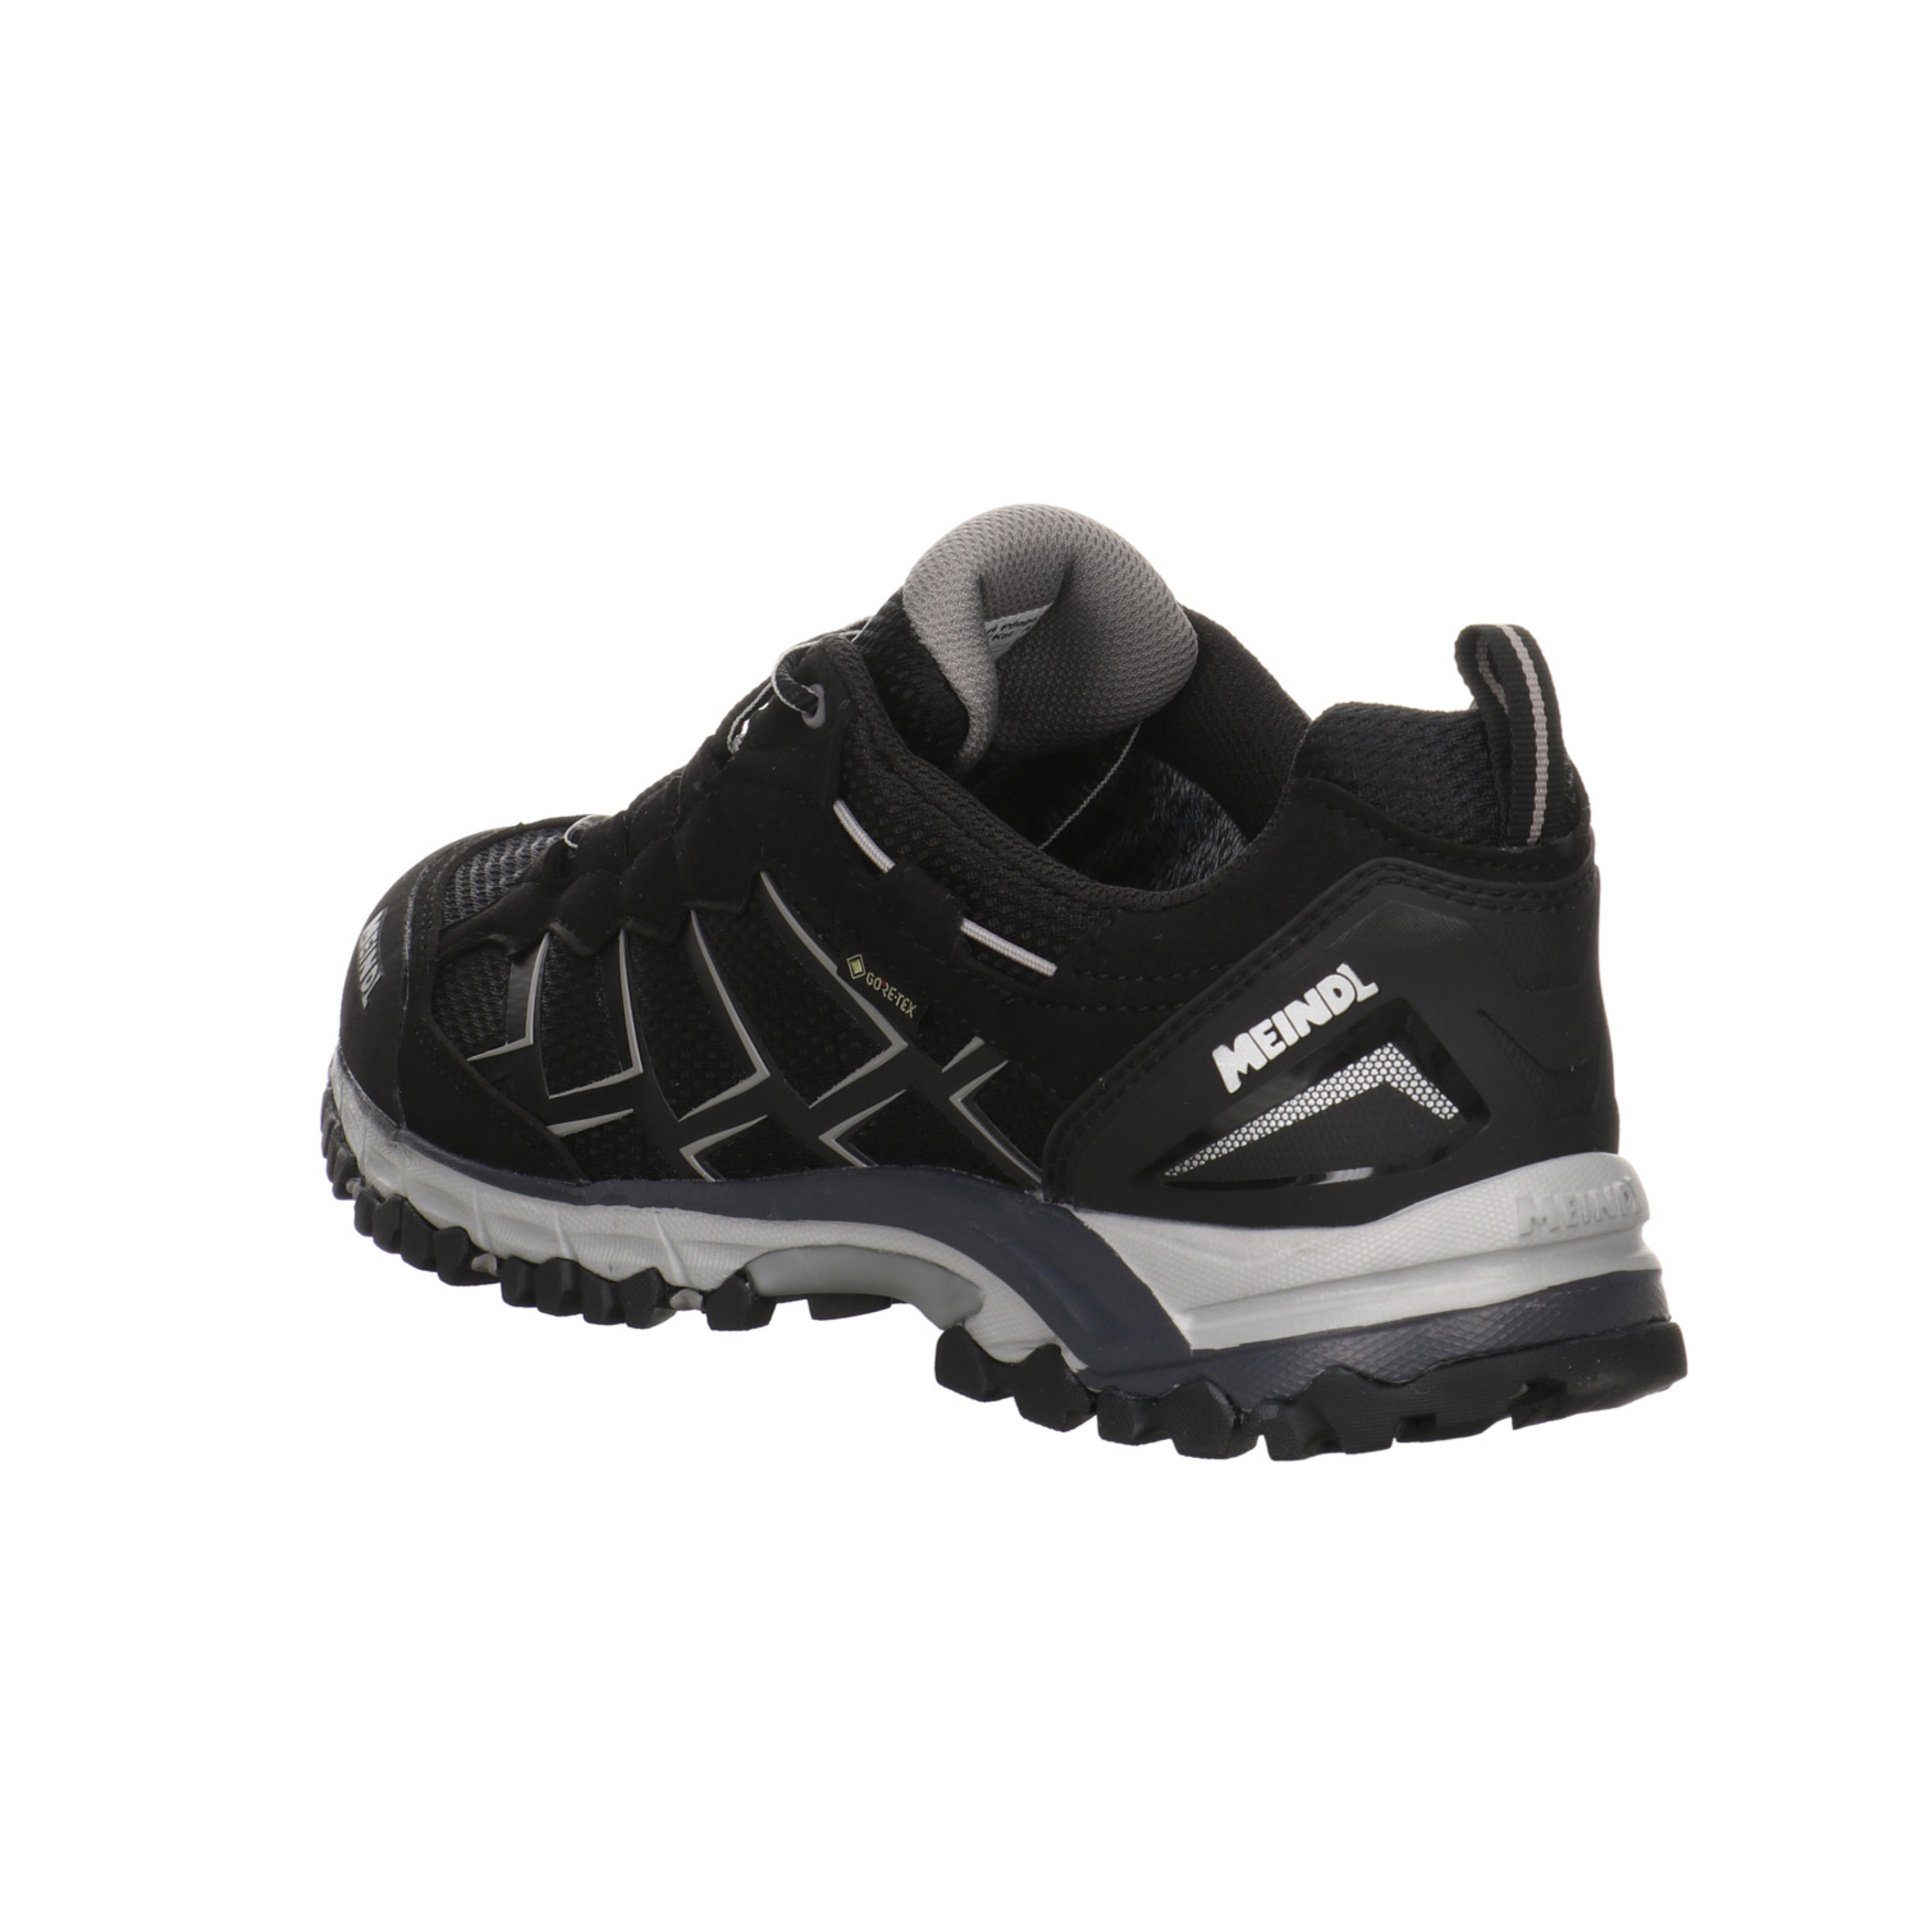 Meindl Herren Outdoor Outdoorschuh Outdoorschuh Textil Schuhe GTX black/grey Caribe